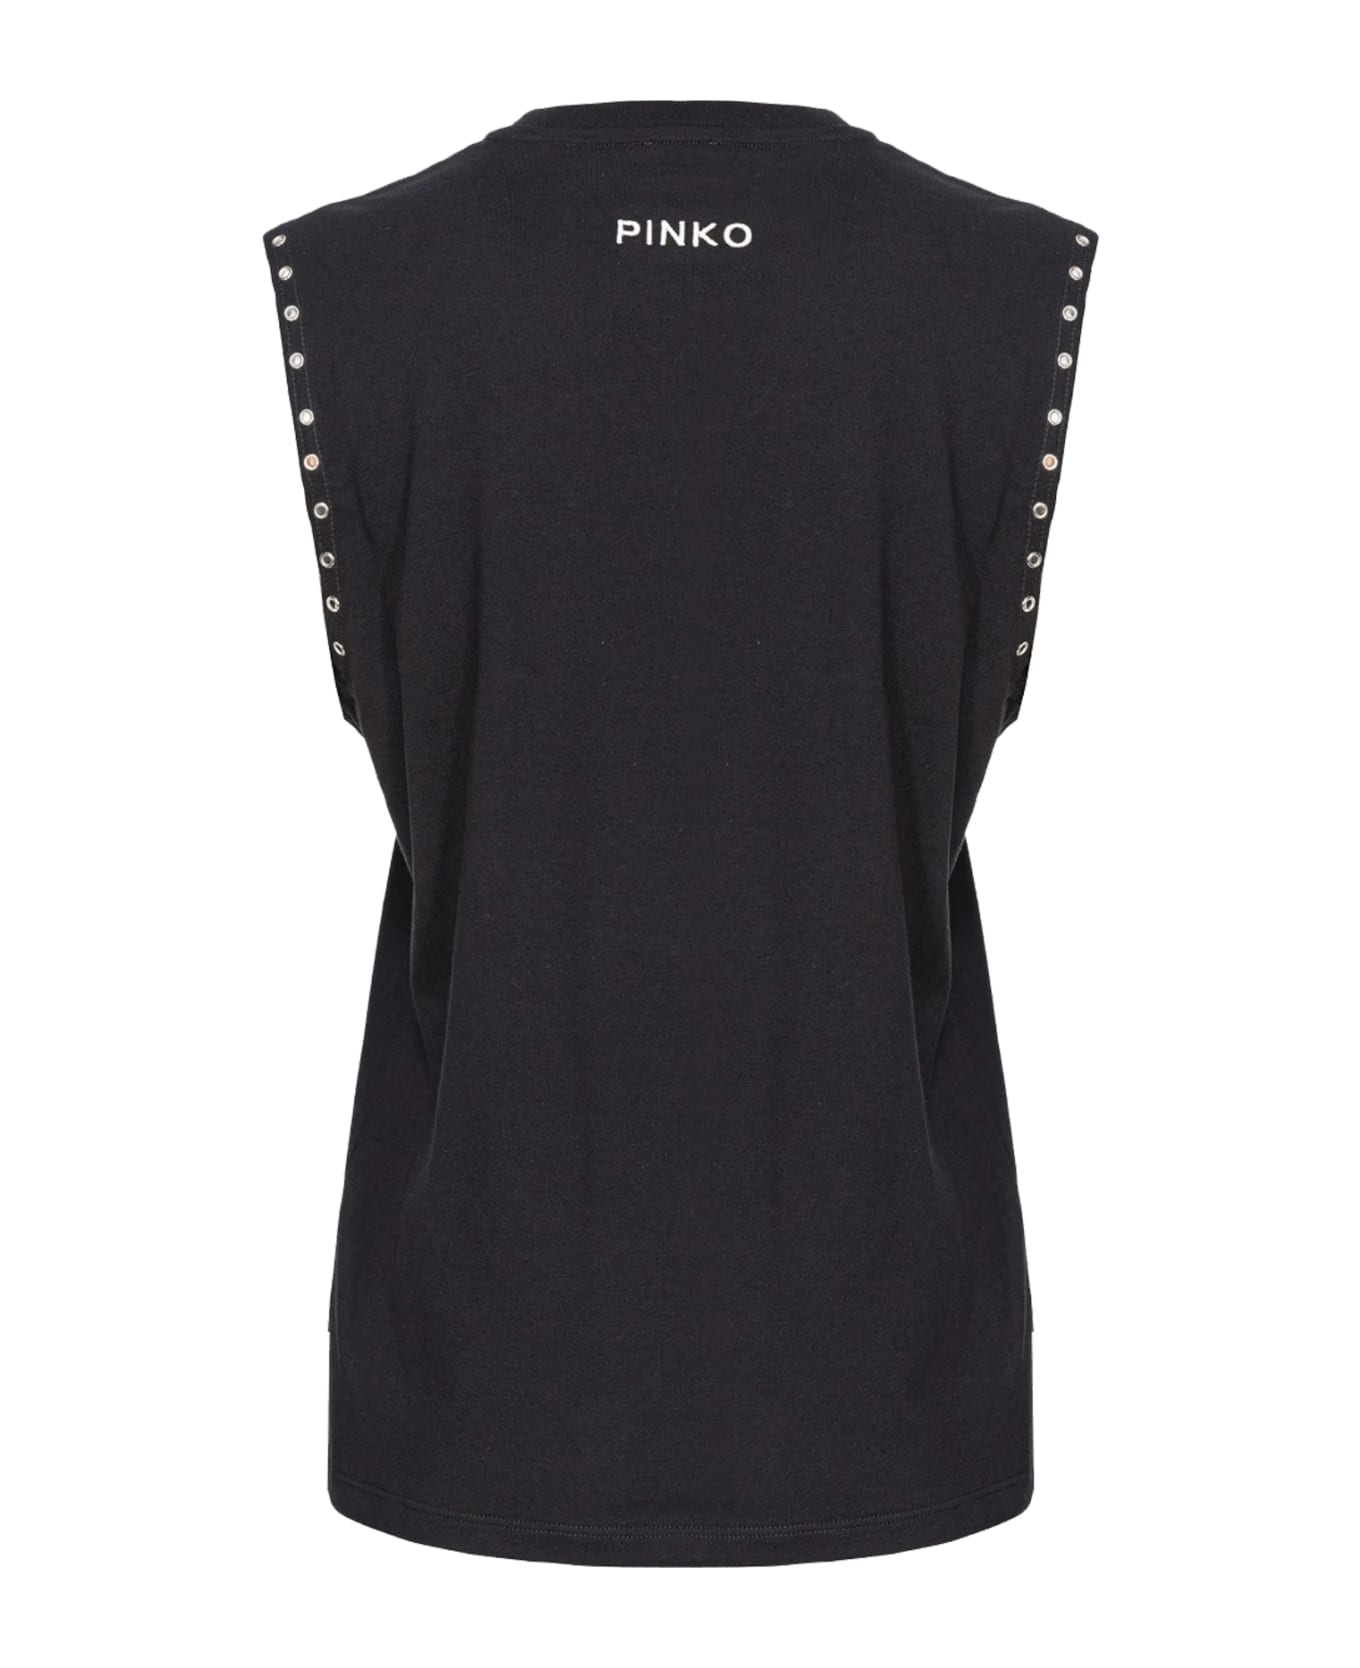 Pinko Bow Printed Sleeveless Top - Black タンクトップ